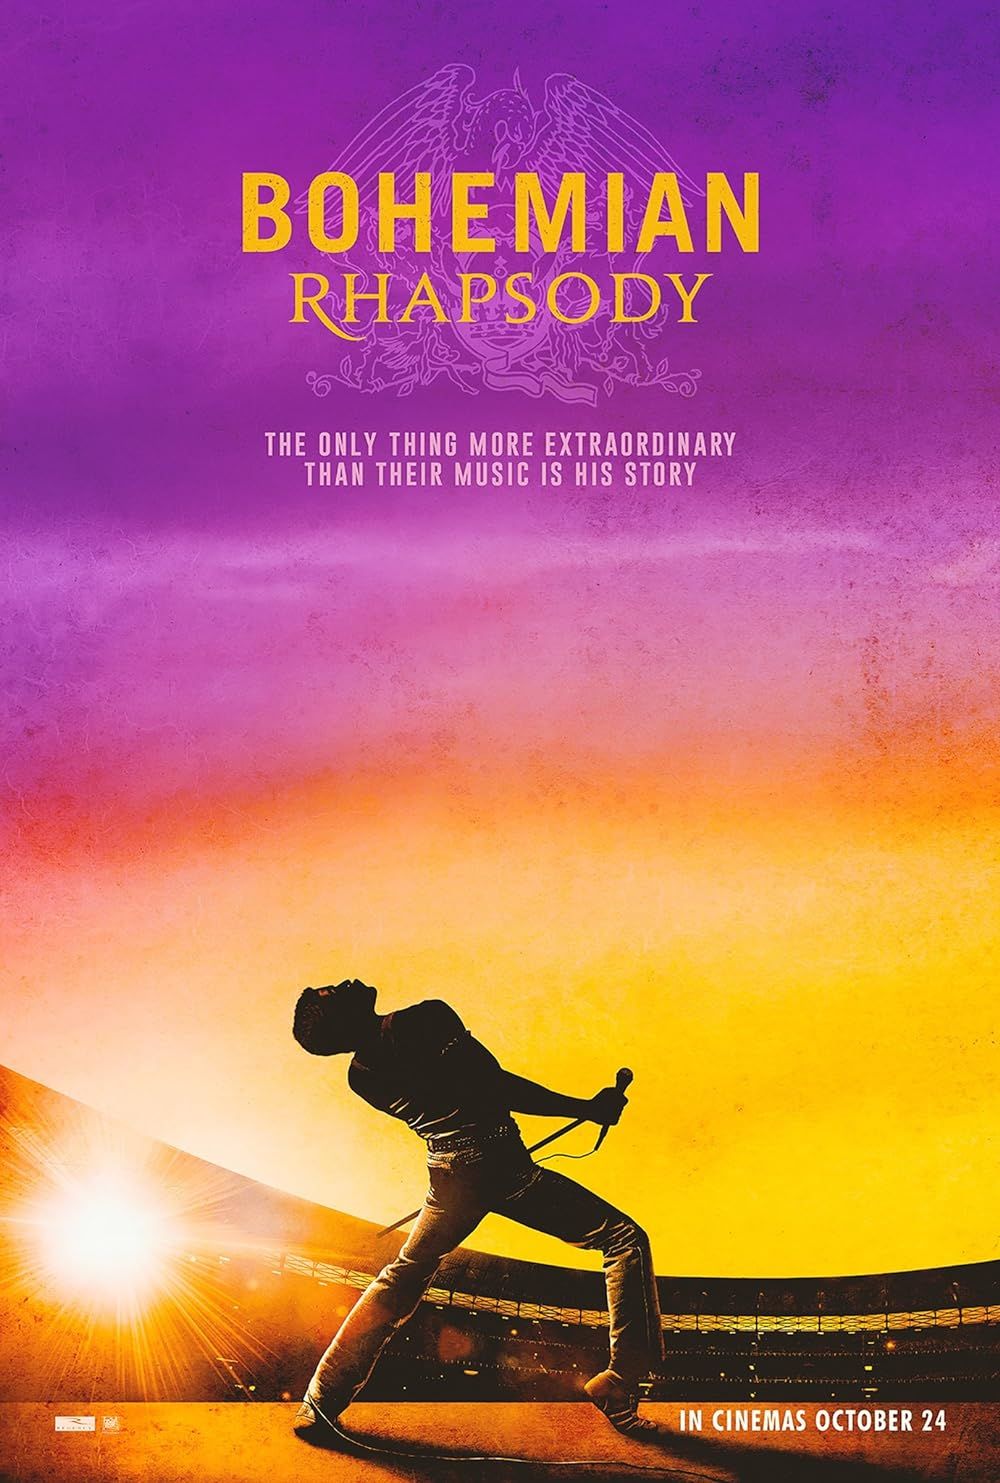 How Accurate Is 'Bohemian Rhapsody'?